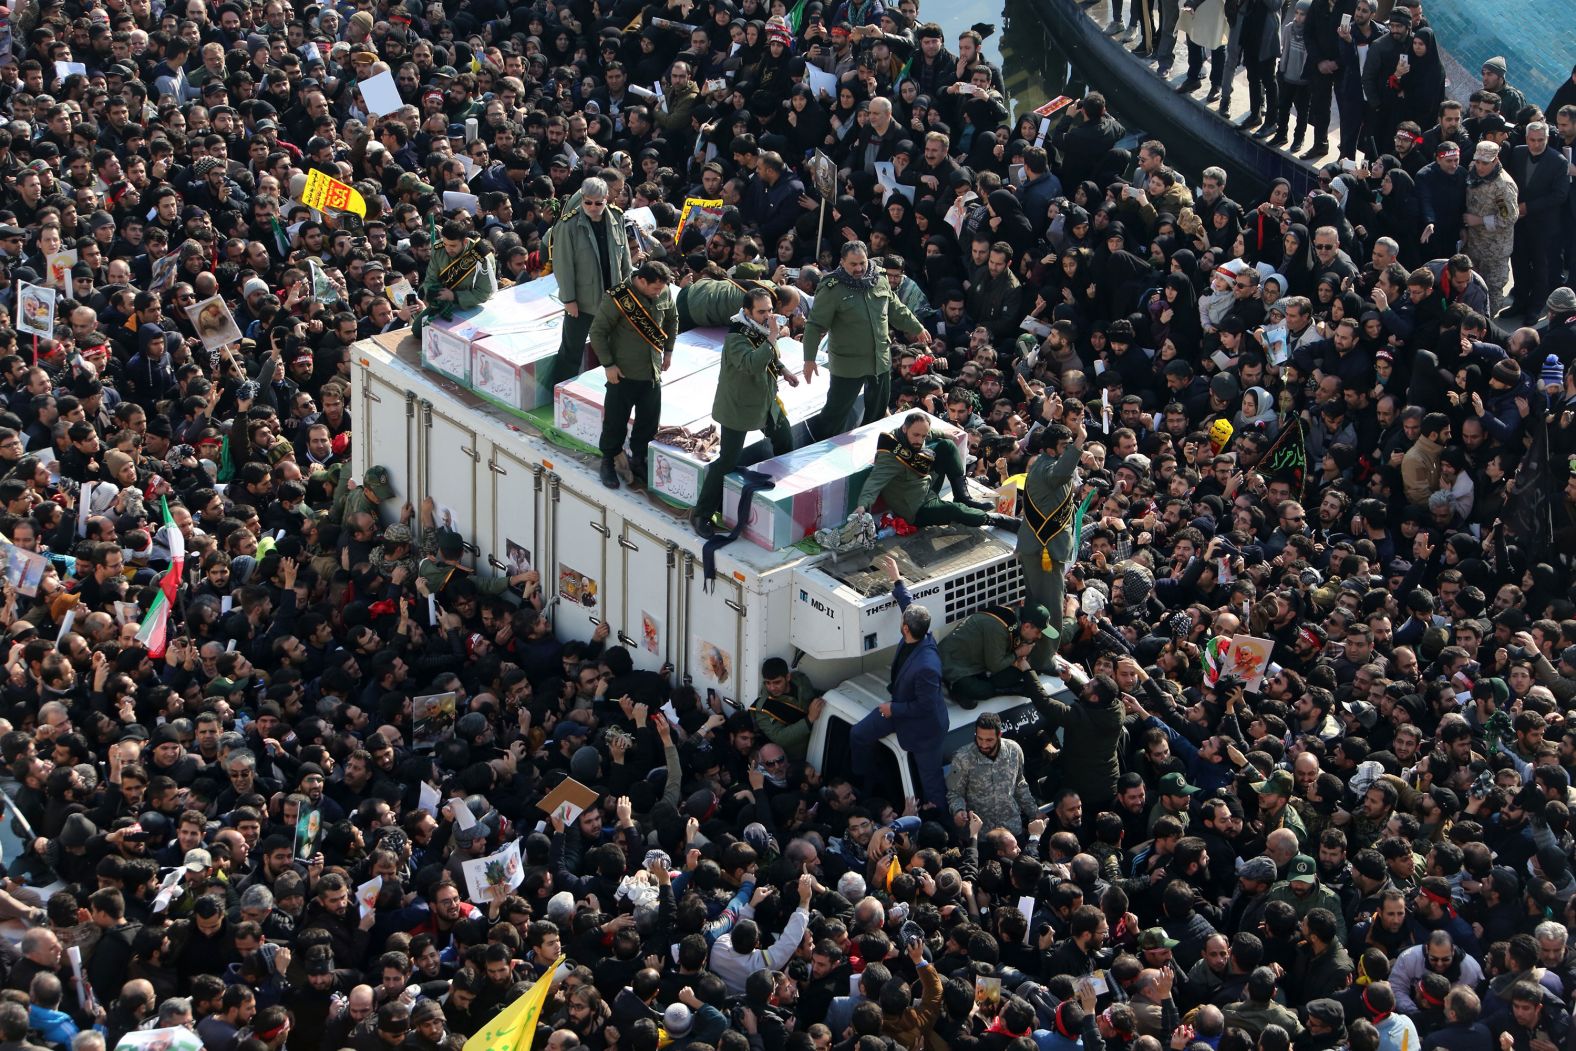 Revolutionary Guard members accompany the coffins.